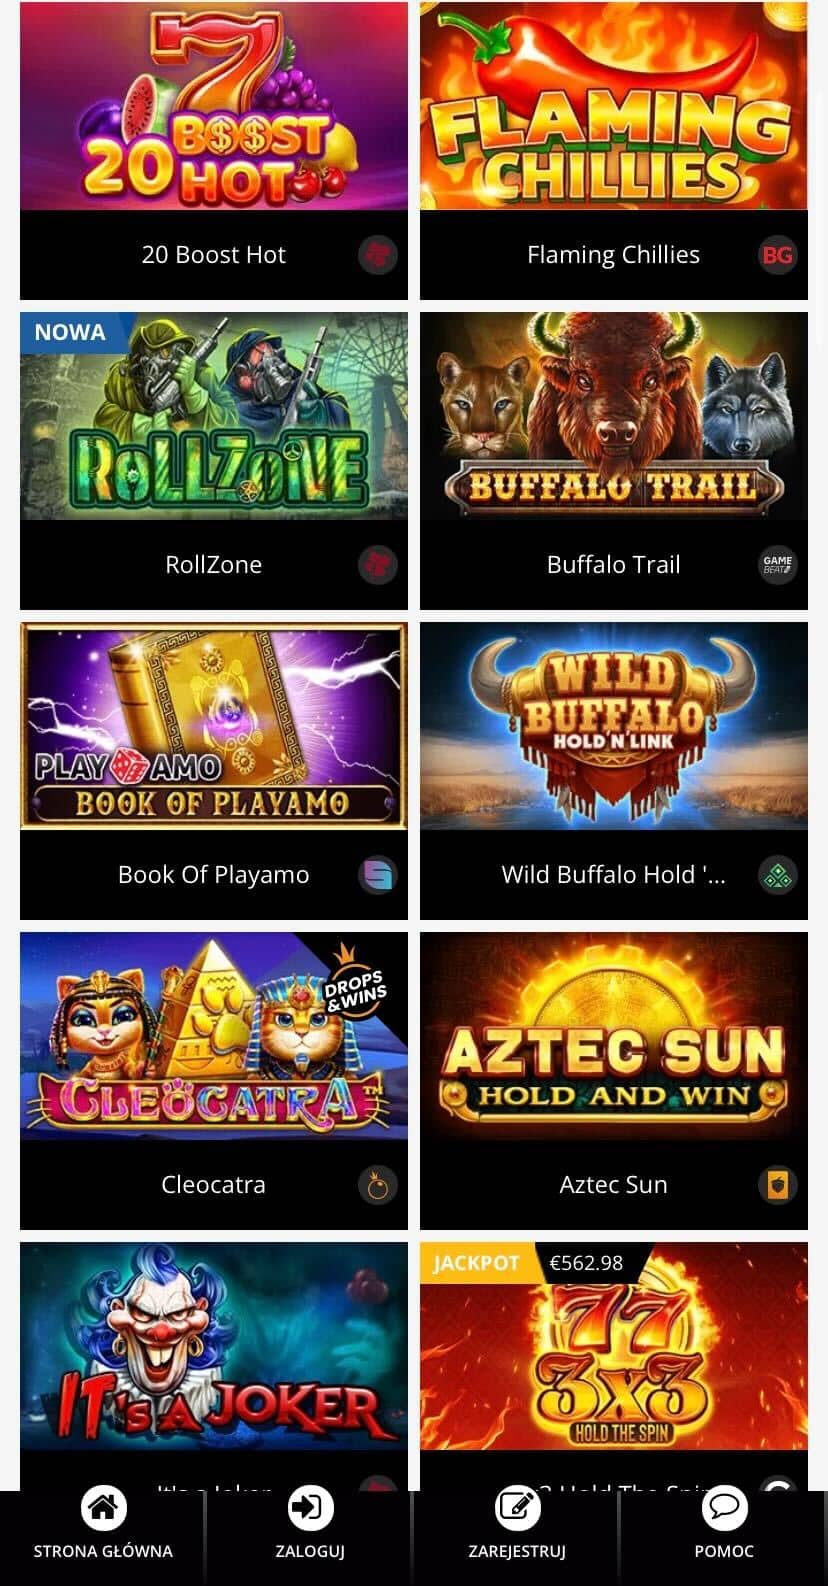 Play Amo Casino Mobile Review